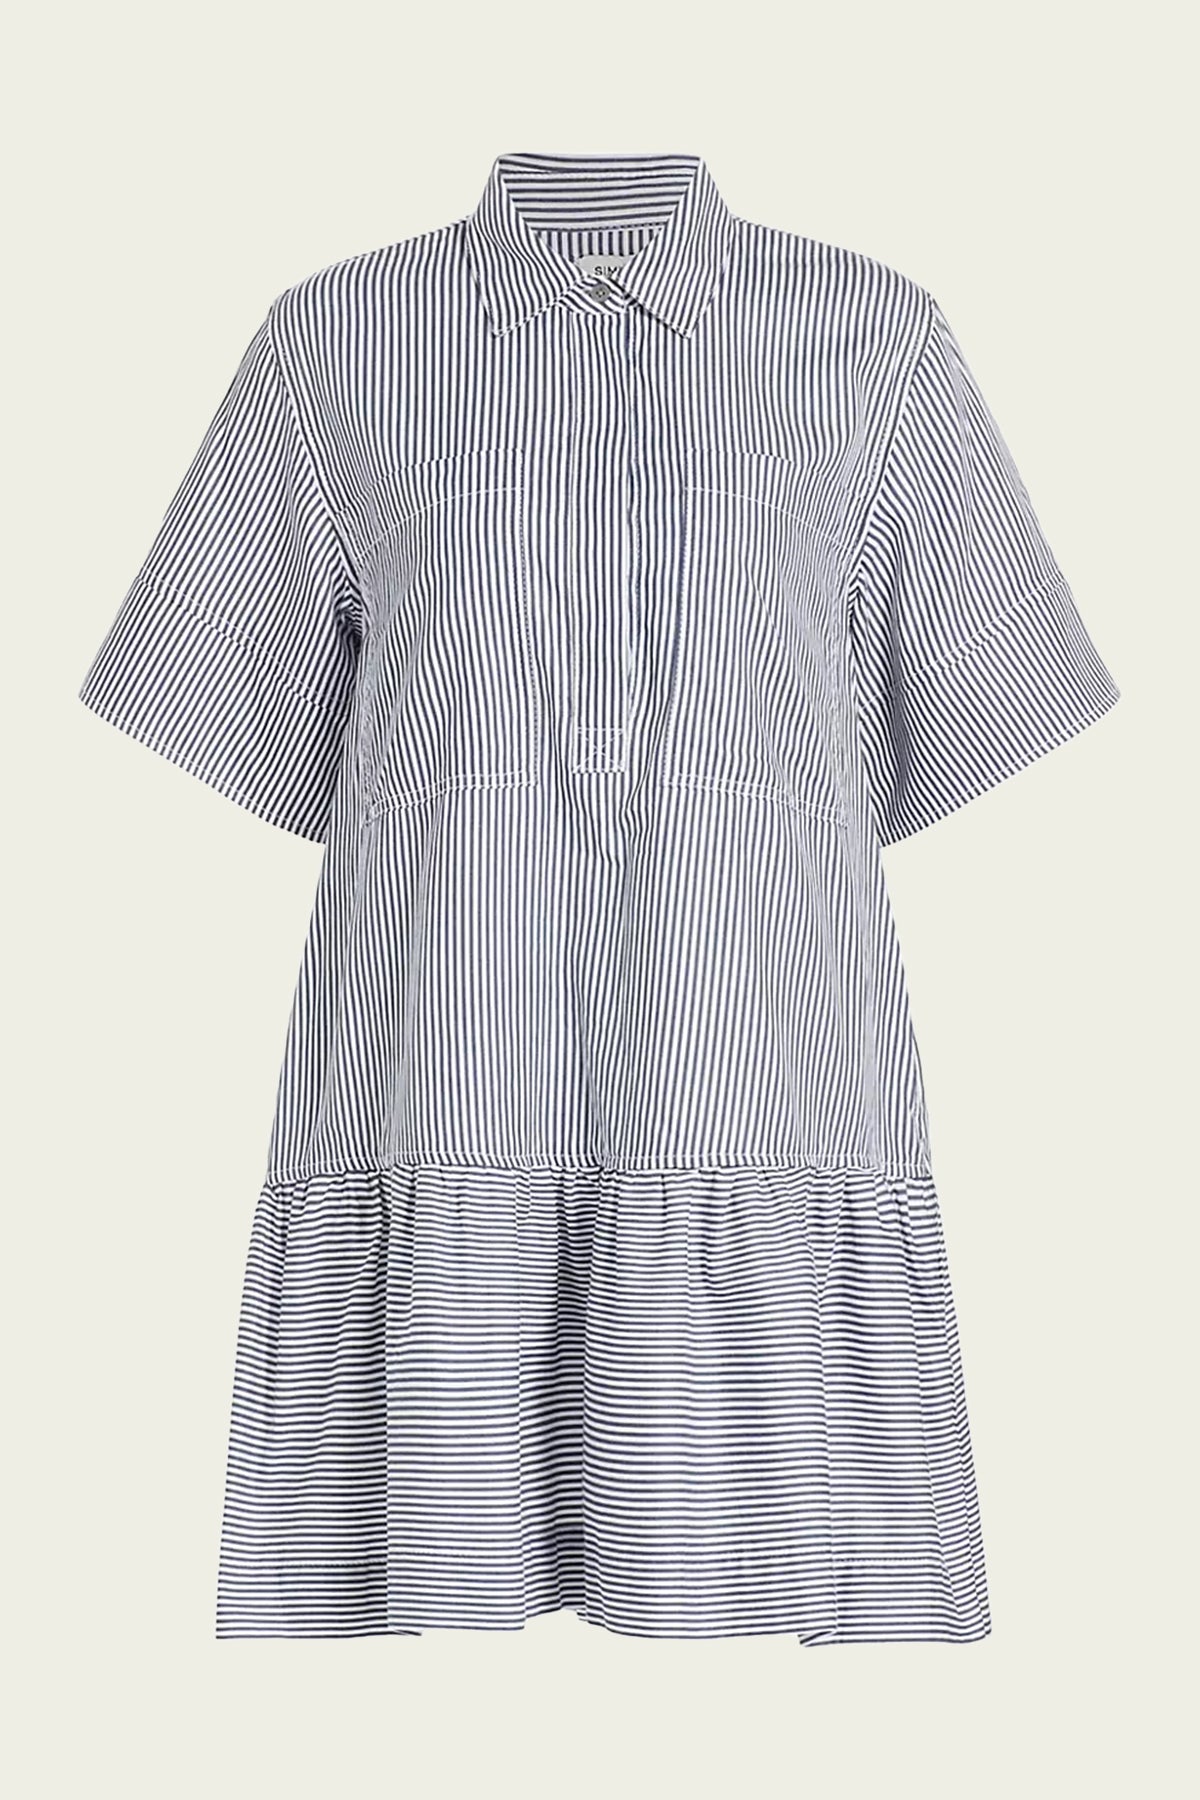 Cris Short Sleeve Shirtdress in Midnight Stripe - shop-olivia.com